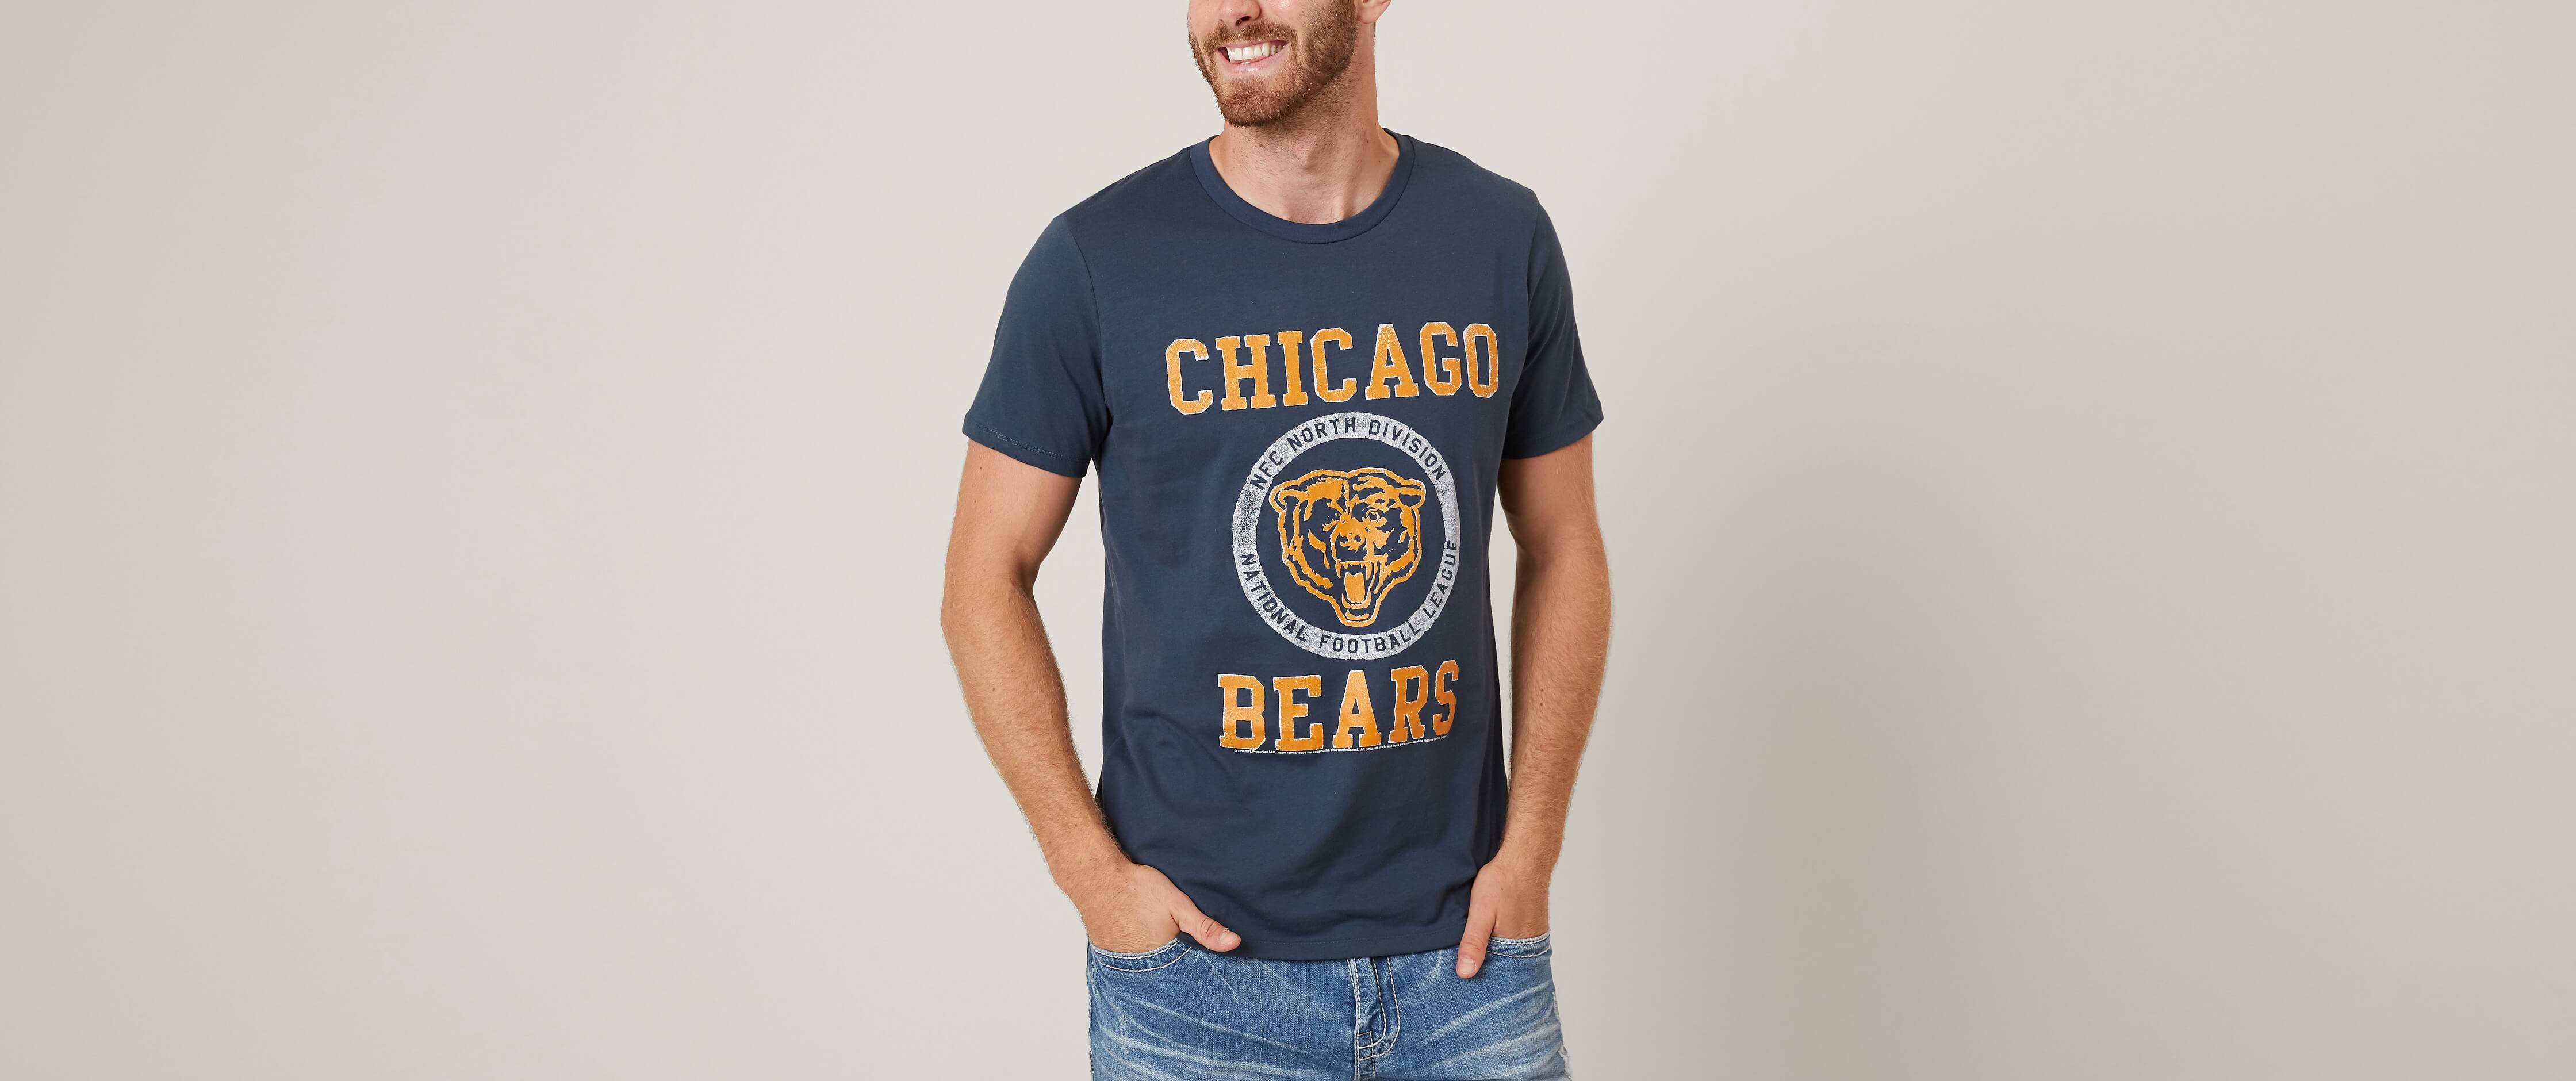 Junk Food Chicago Bears T-Shirt - Men's 